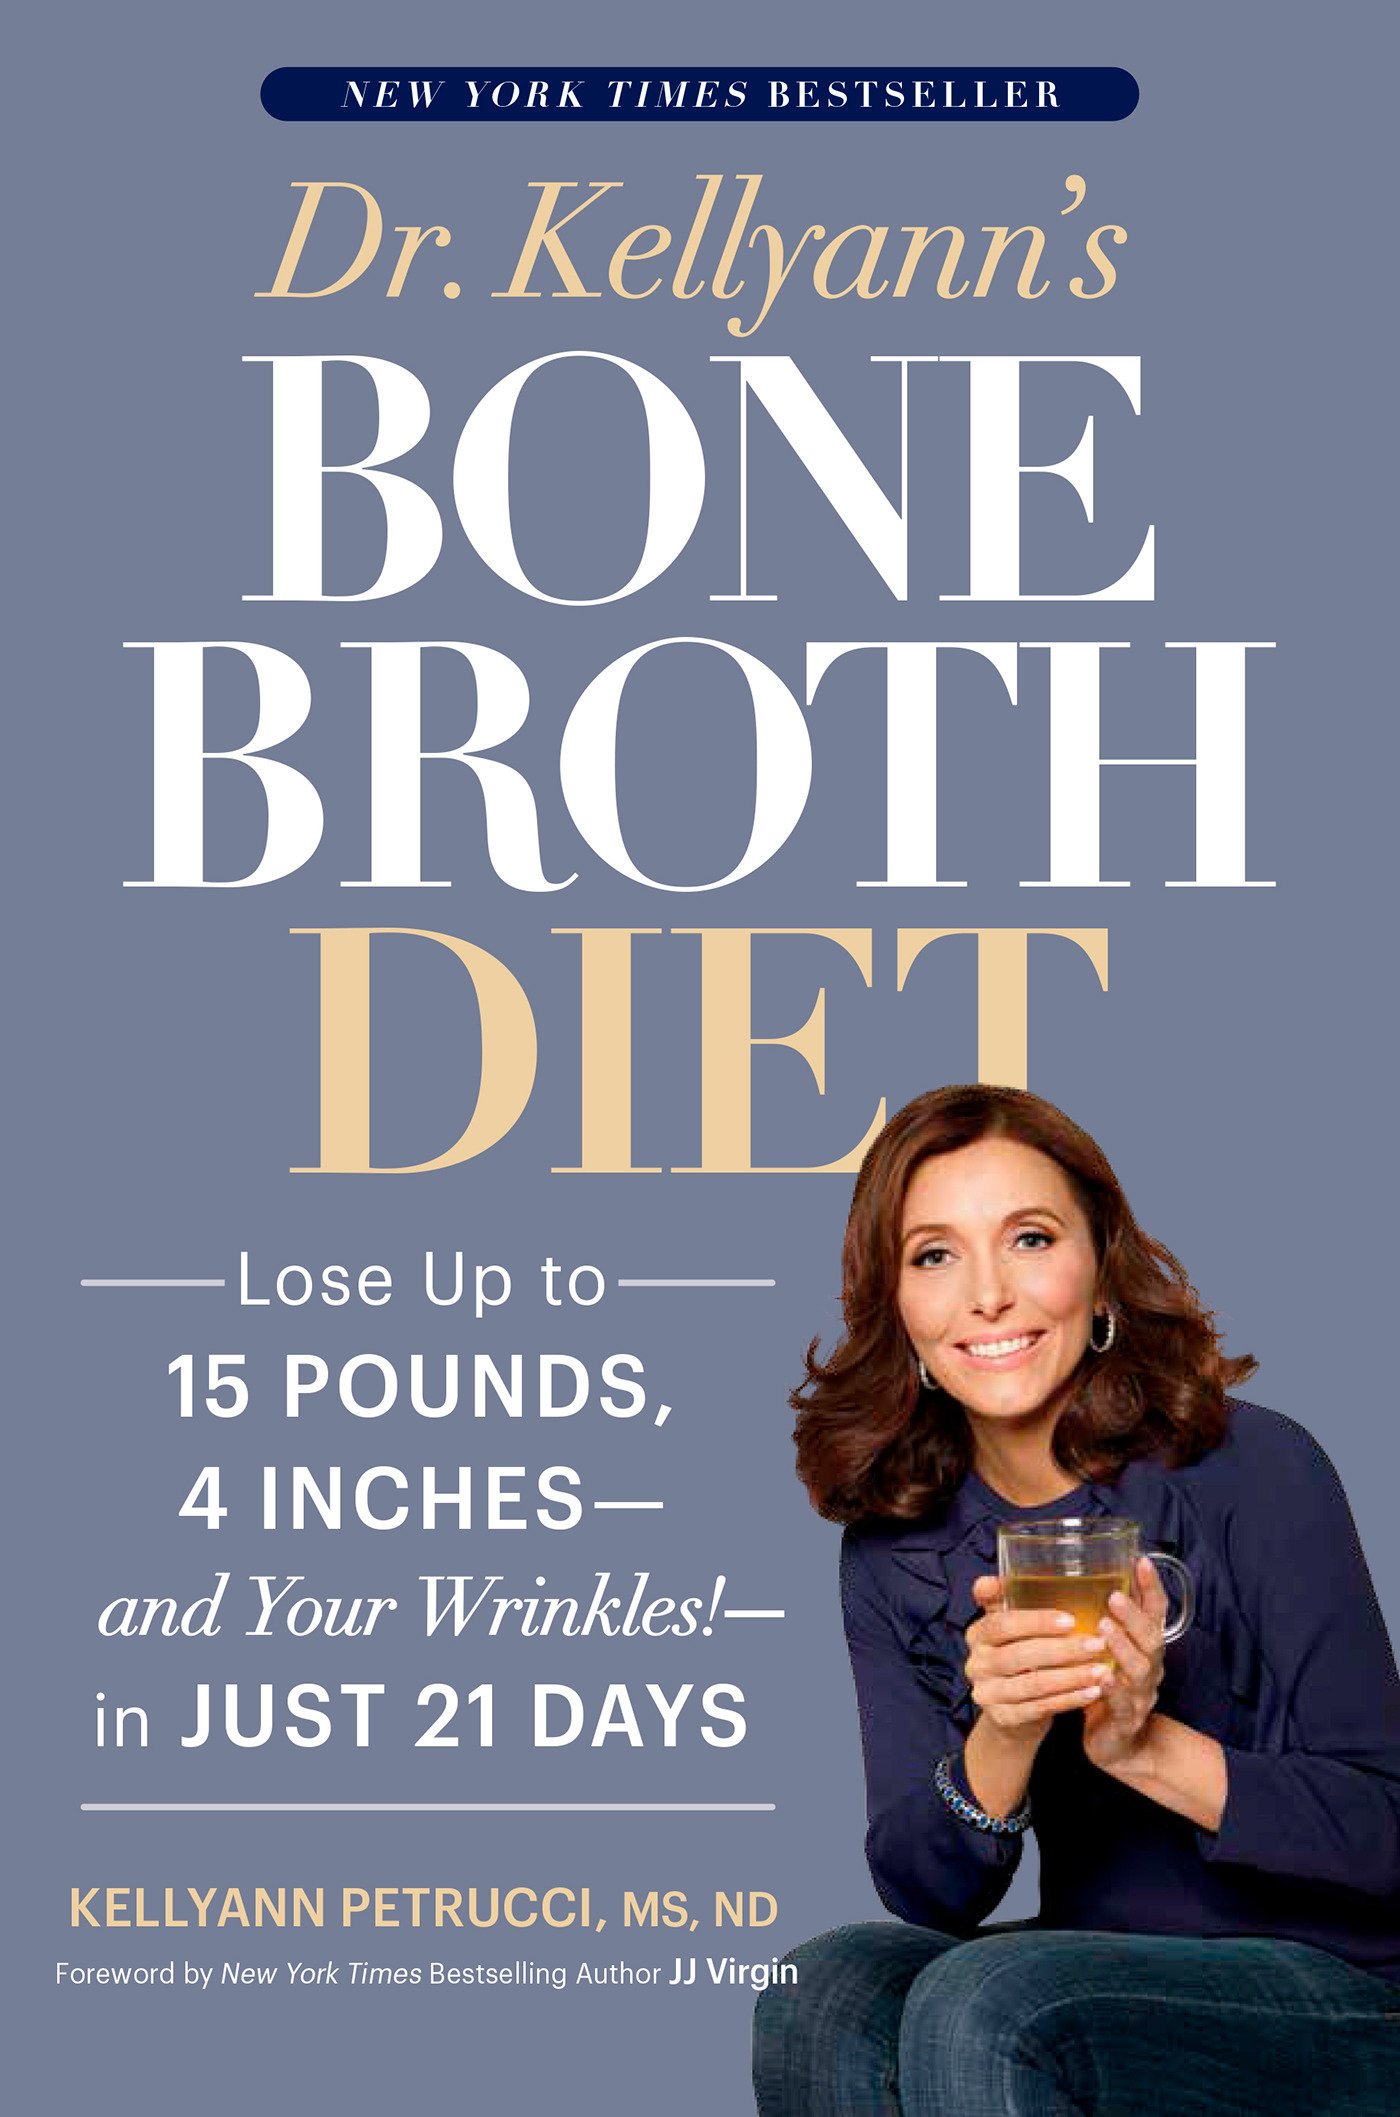 Dr. Kellyann Petrucci - The Bone Broth Diet eCourse